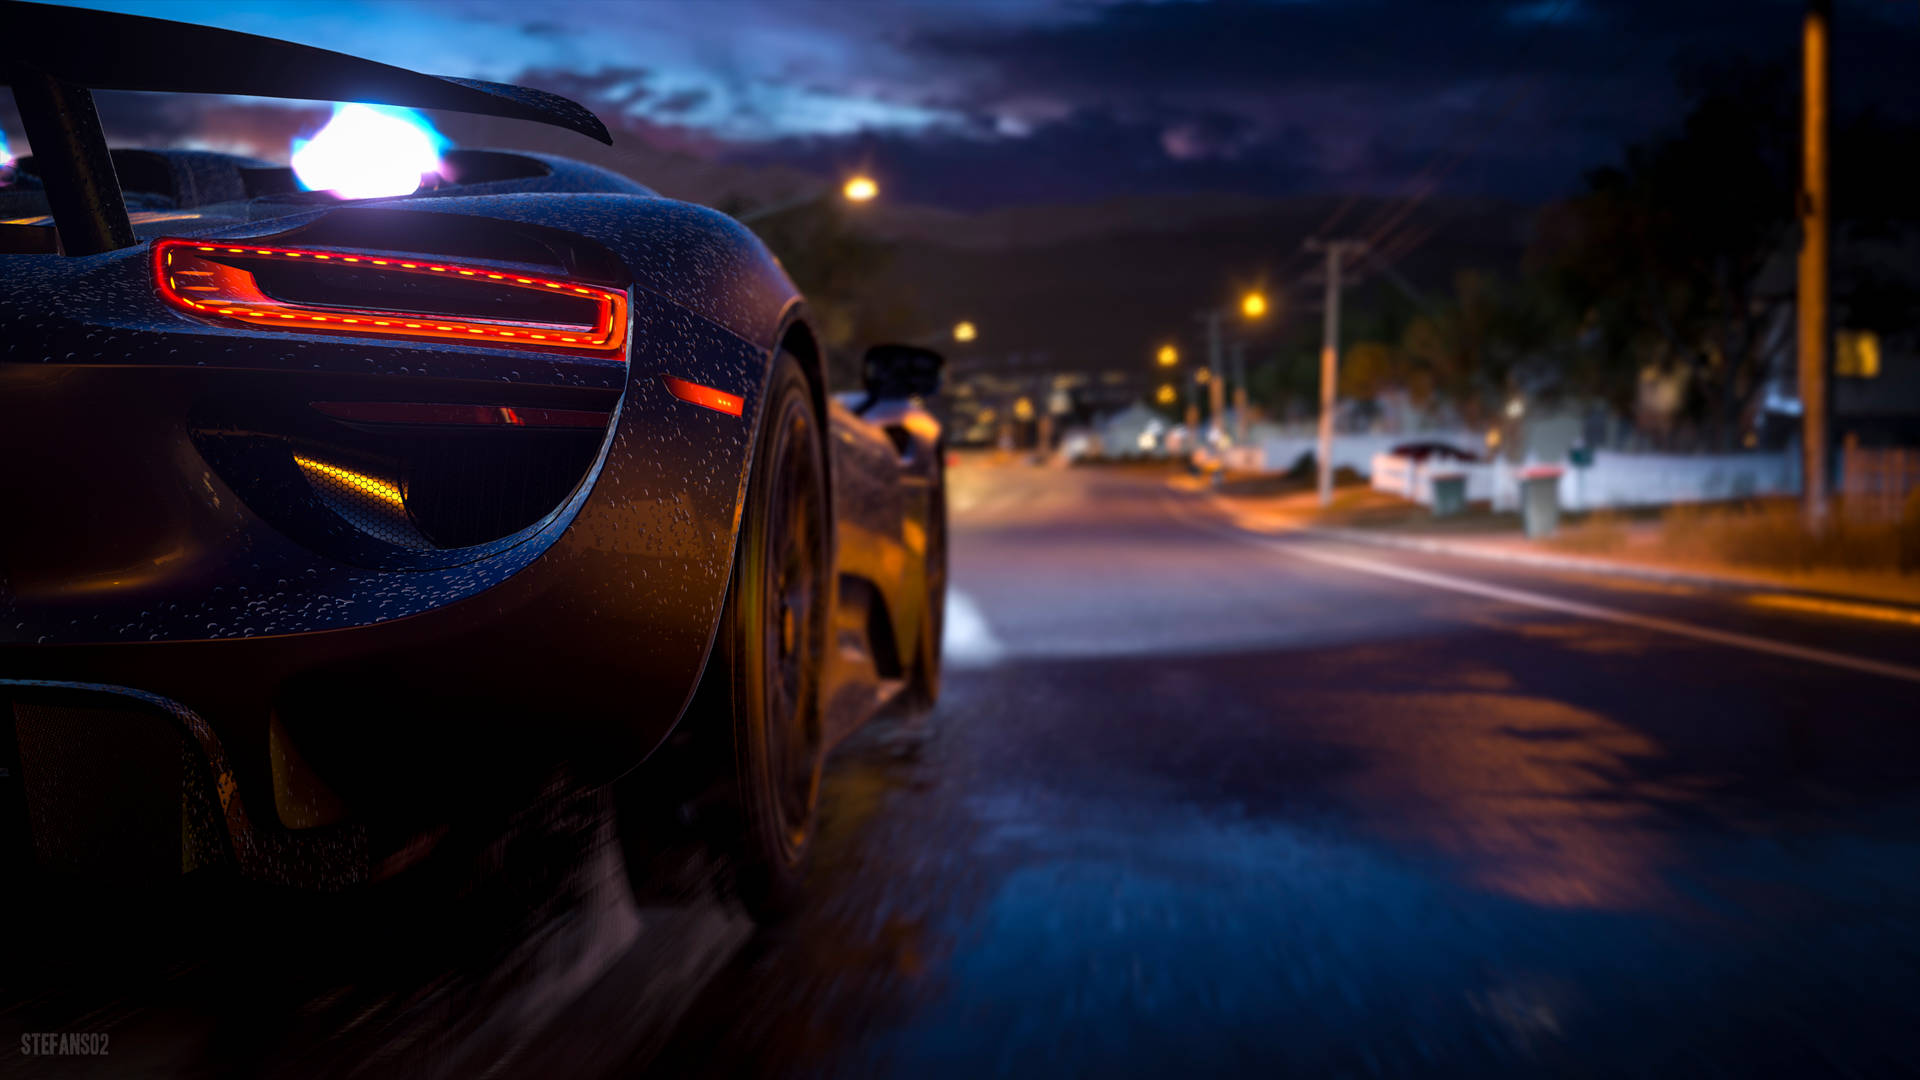 Night Drive Forza Horizon 3 Picture